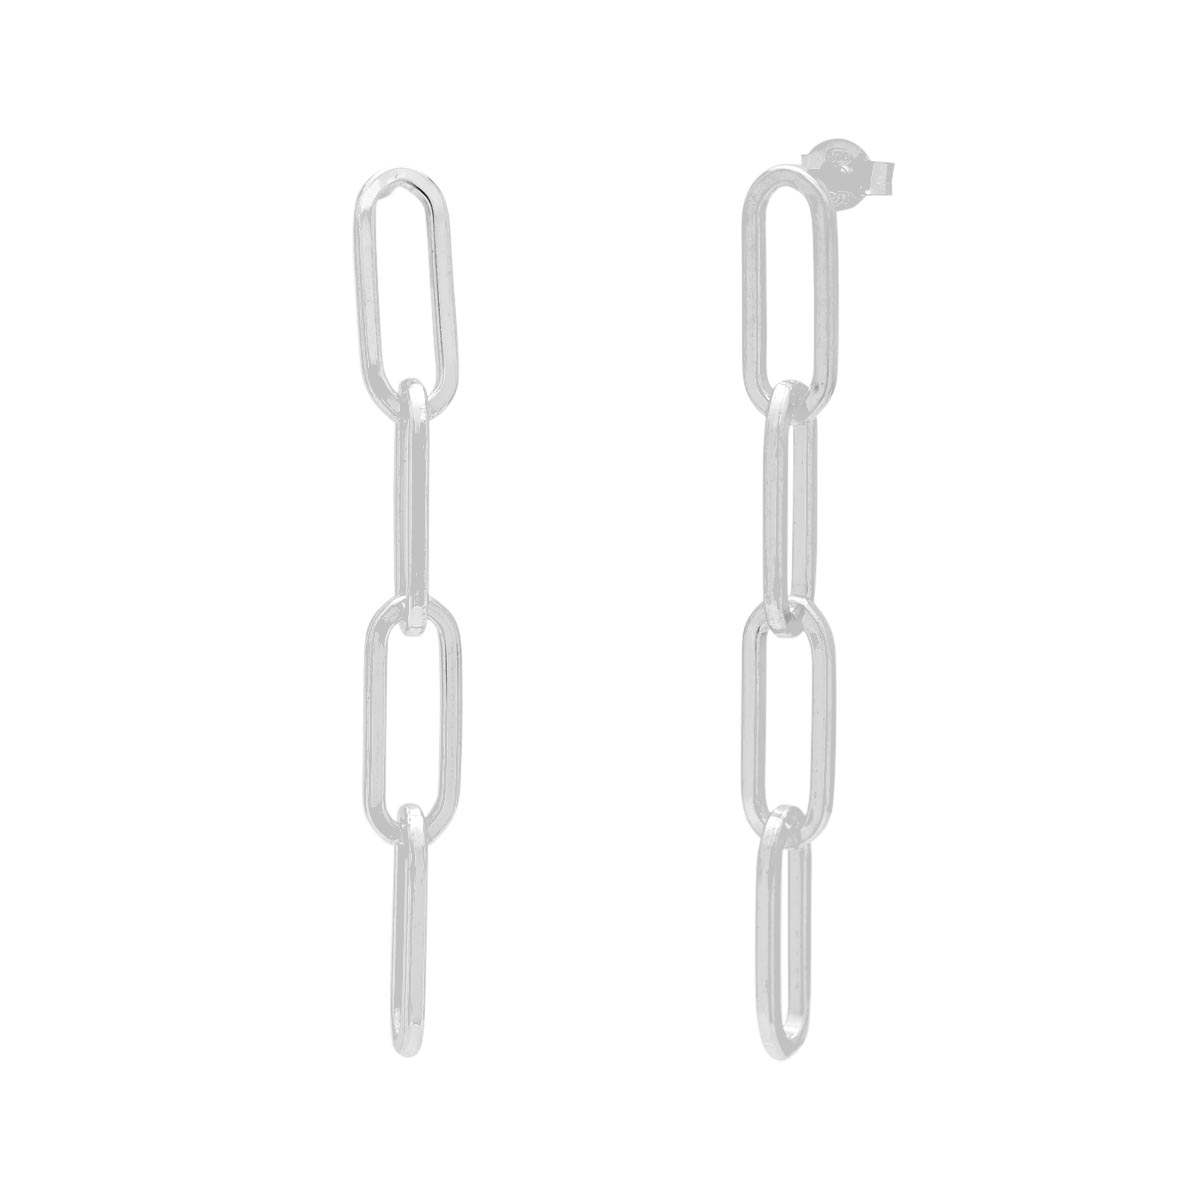 Four Link Paperclip Earrings in Sterling Silver